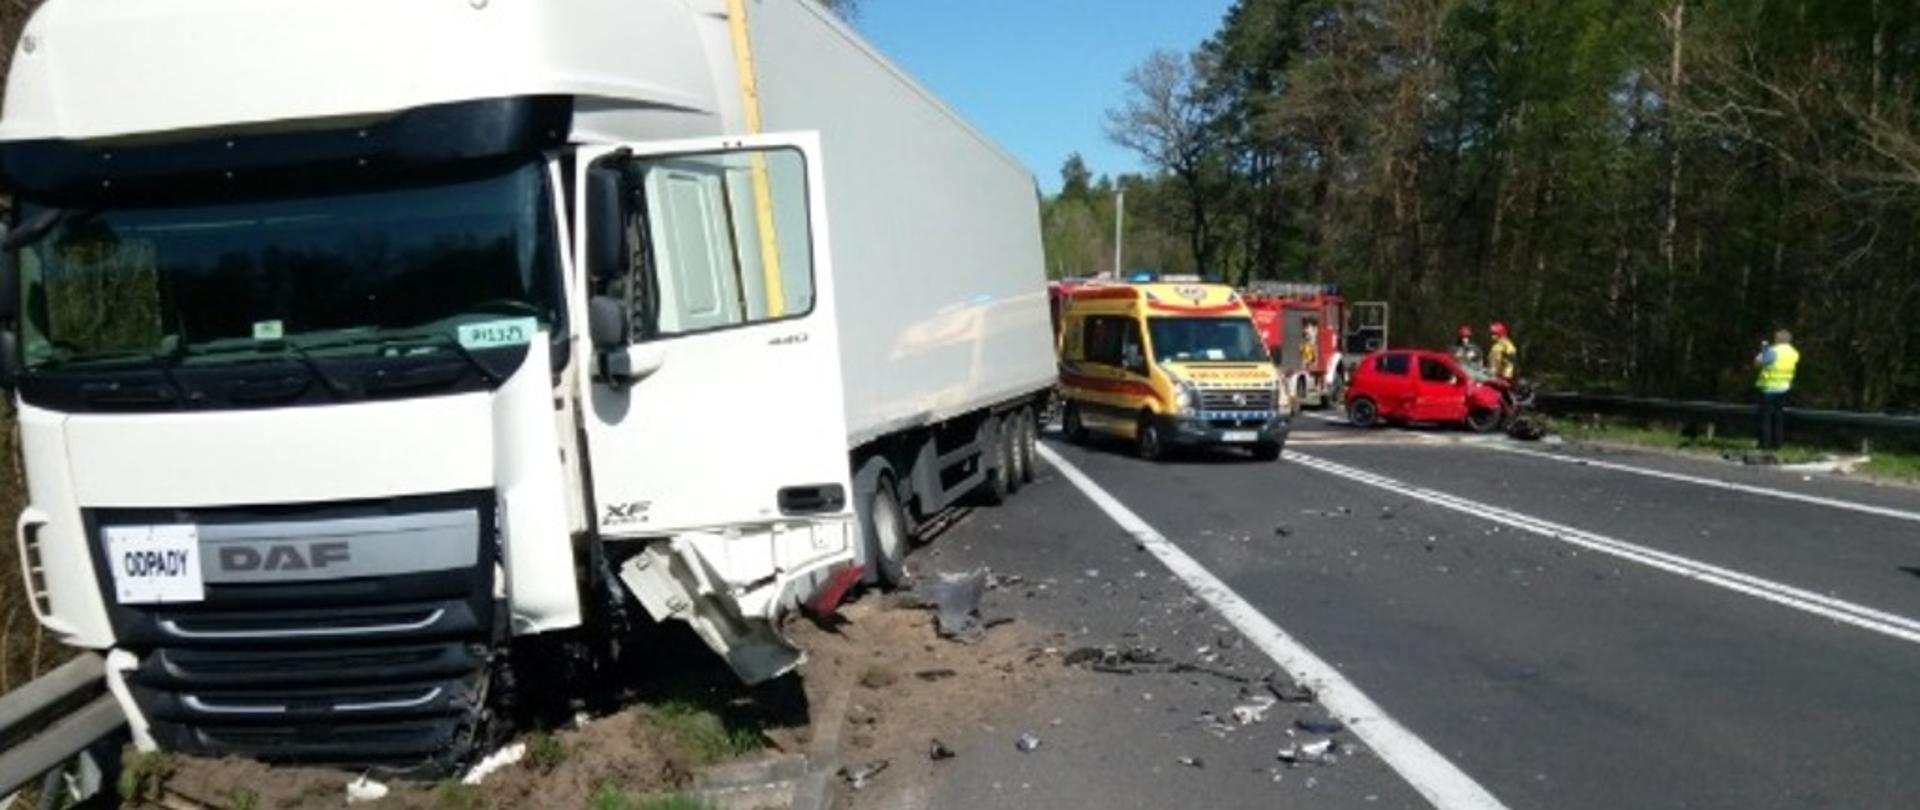 DK6 – wypadek drogowy 